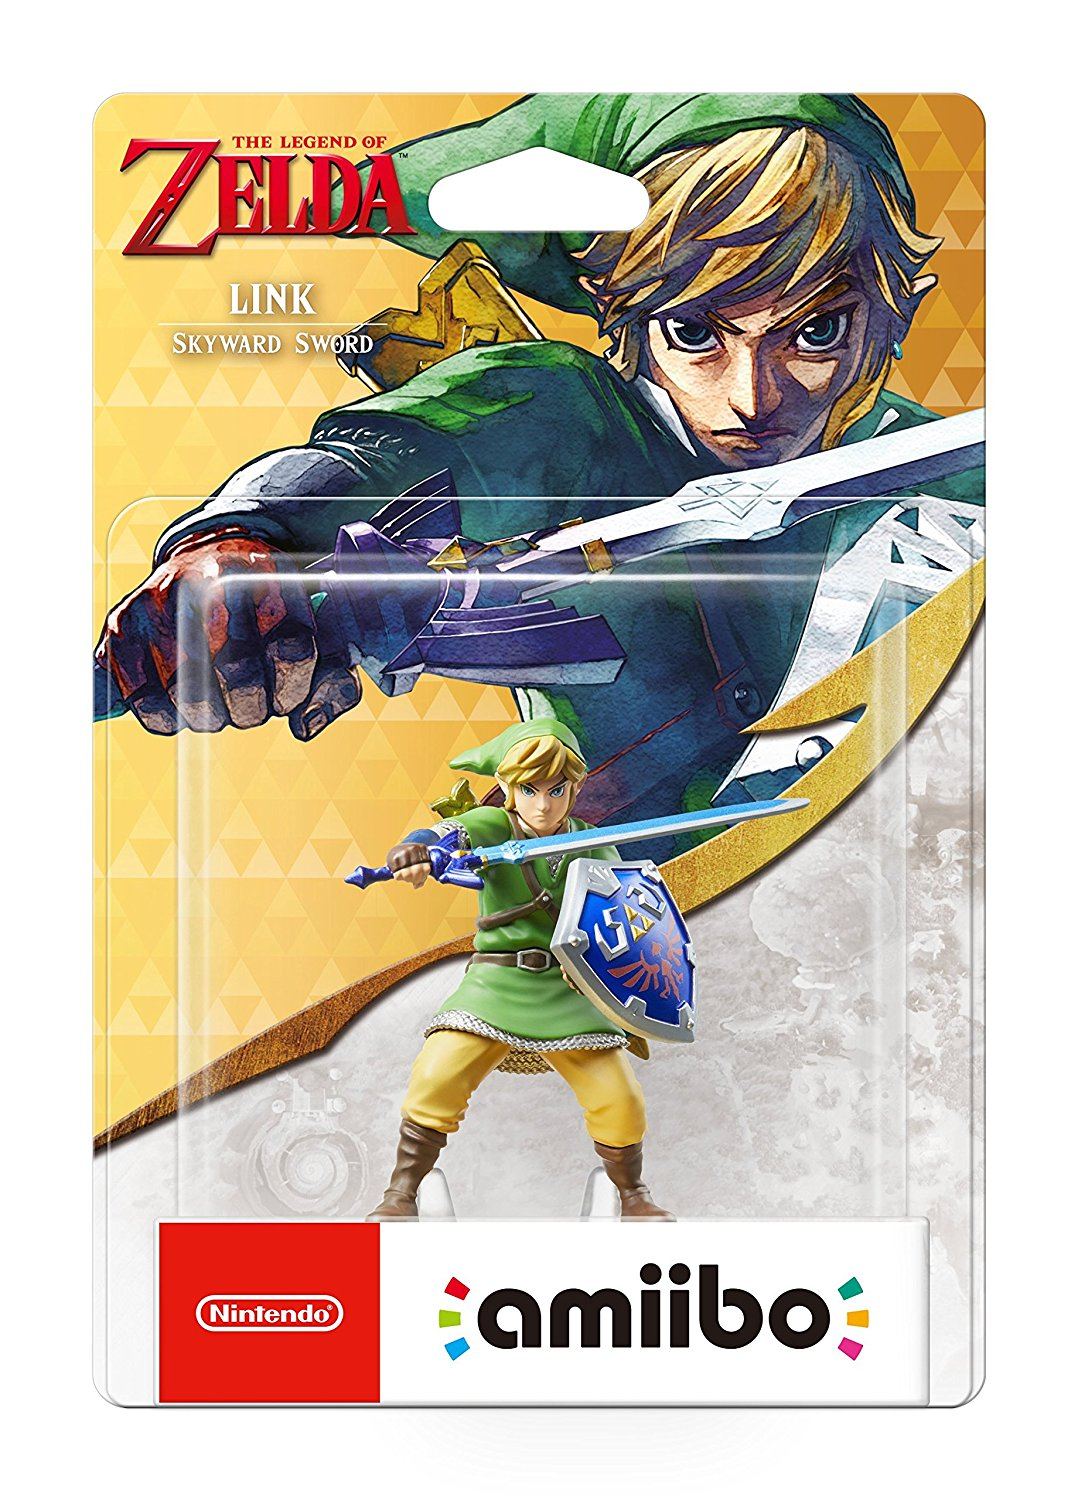 The Legend of Zelda Skyward Sword HD EU Version Nintendo Switch Game Deals  for Nintendo Switch